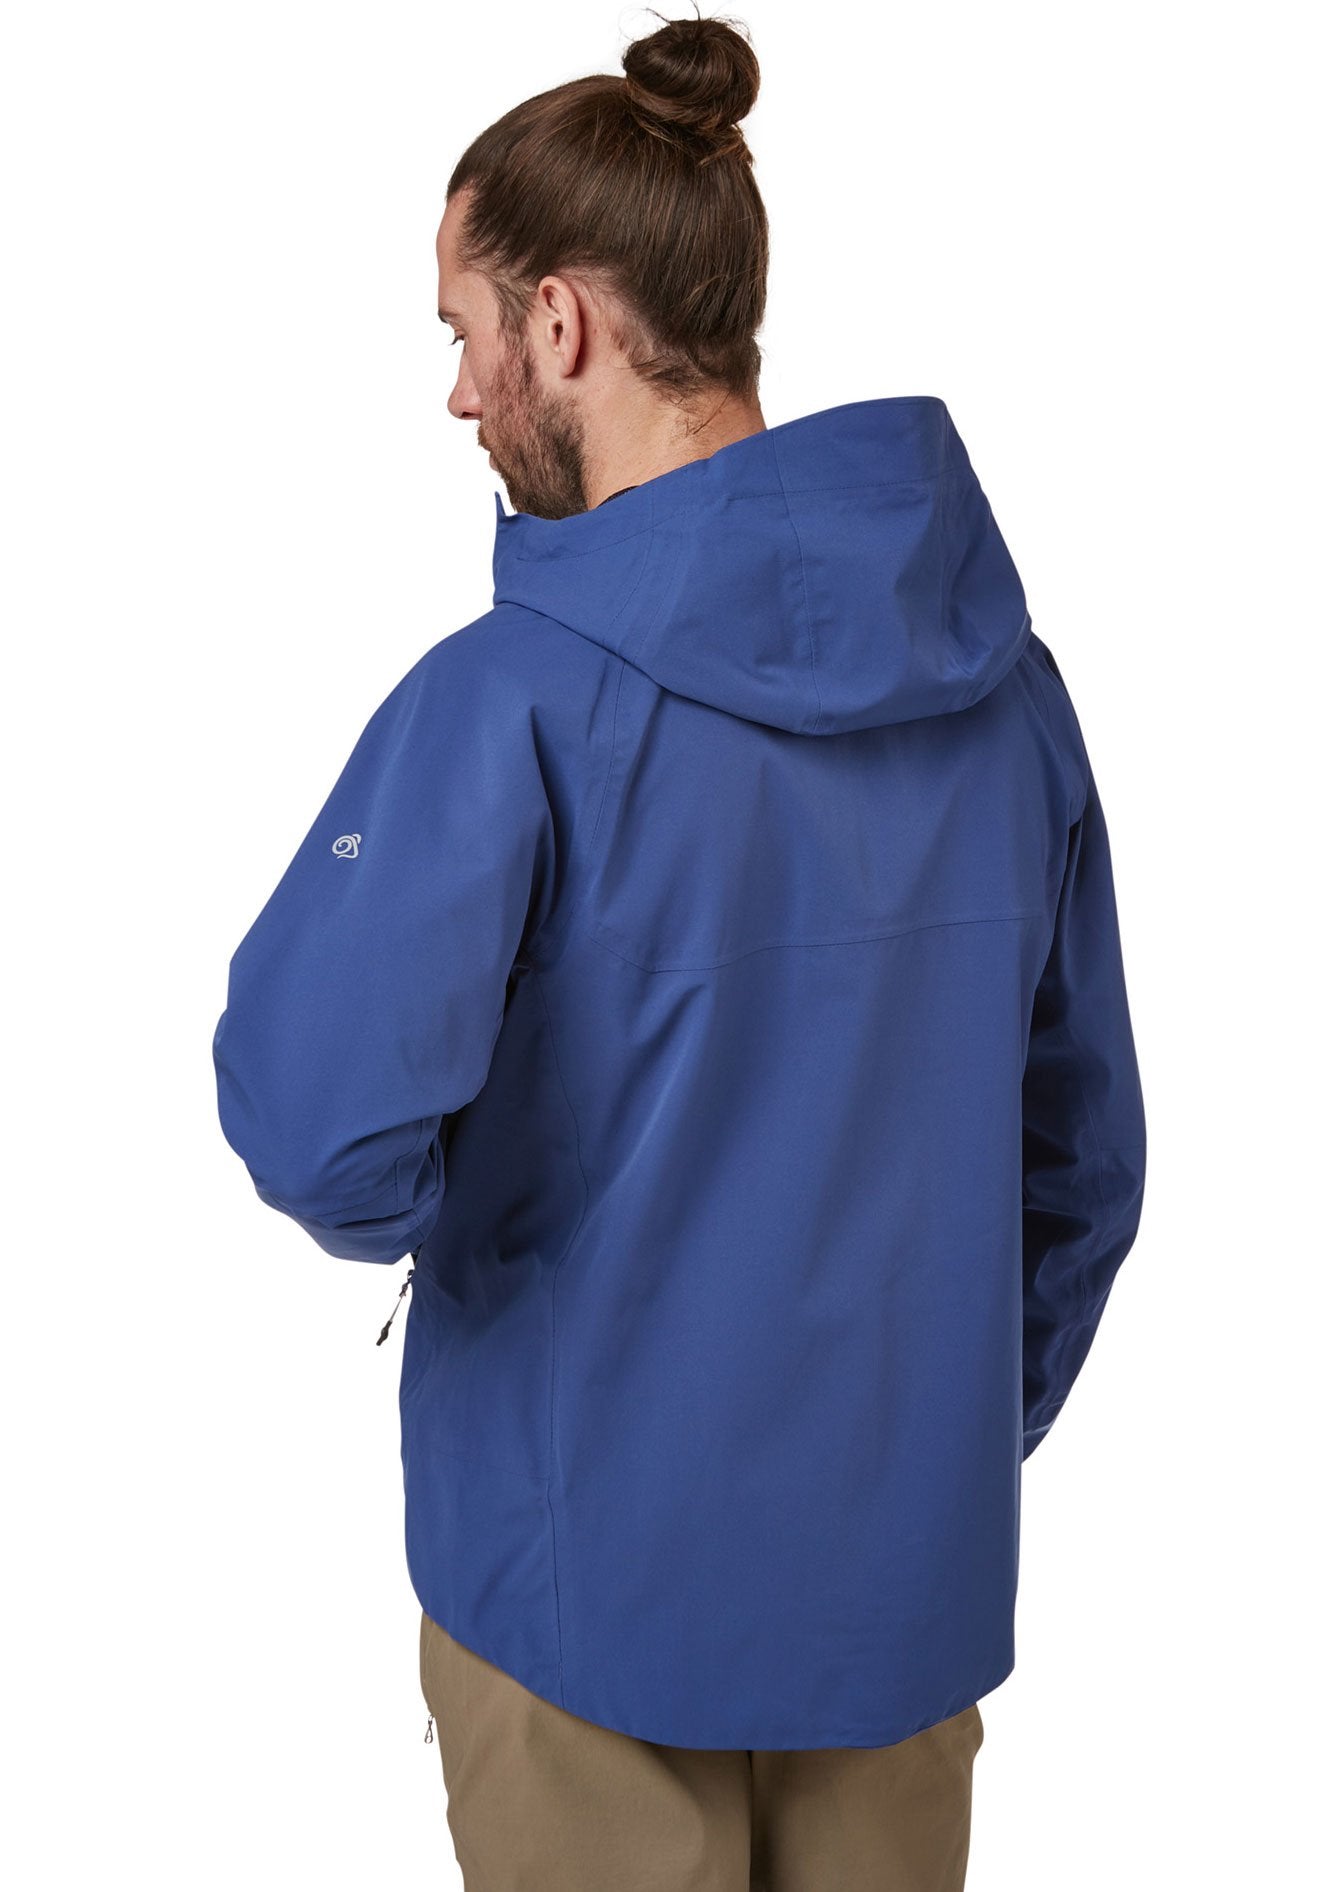 Hood view Trelawney Waterproof Breathable Jacket by Craghoppers